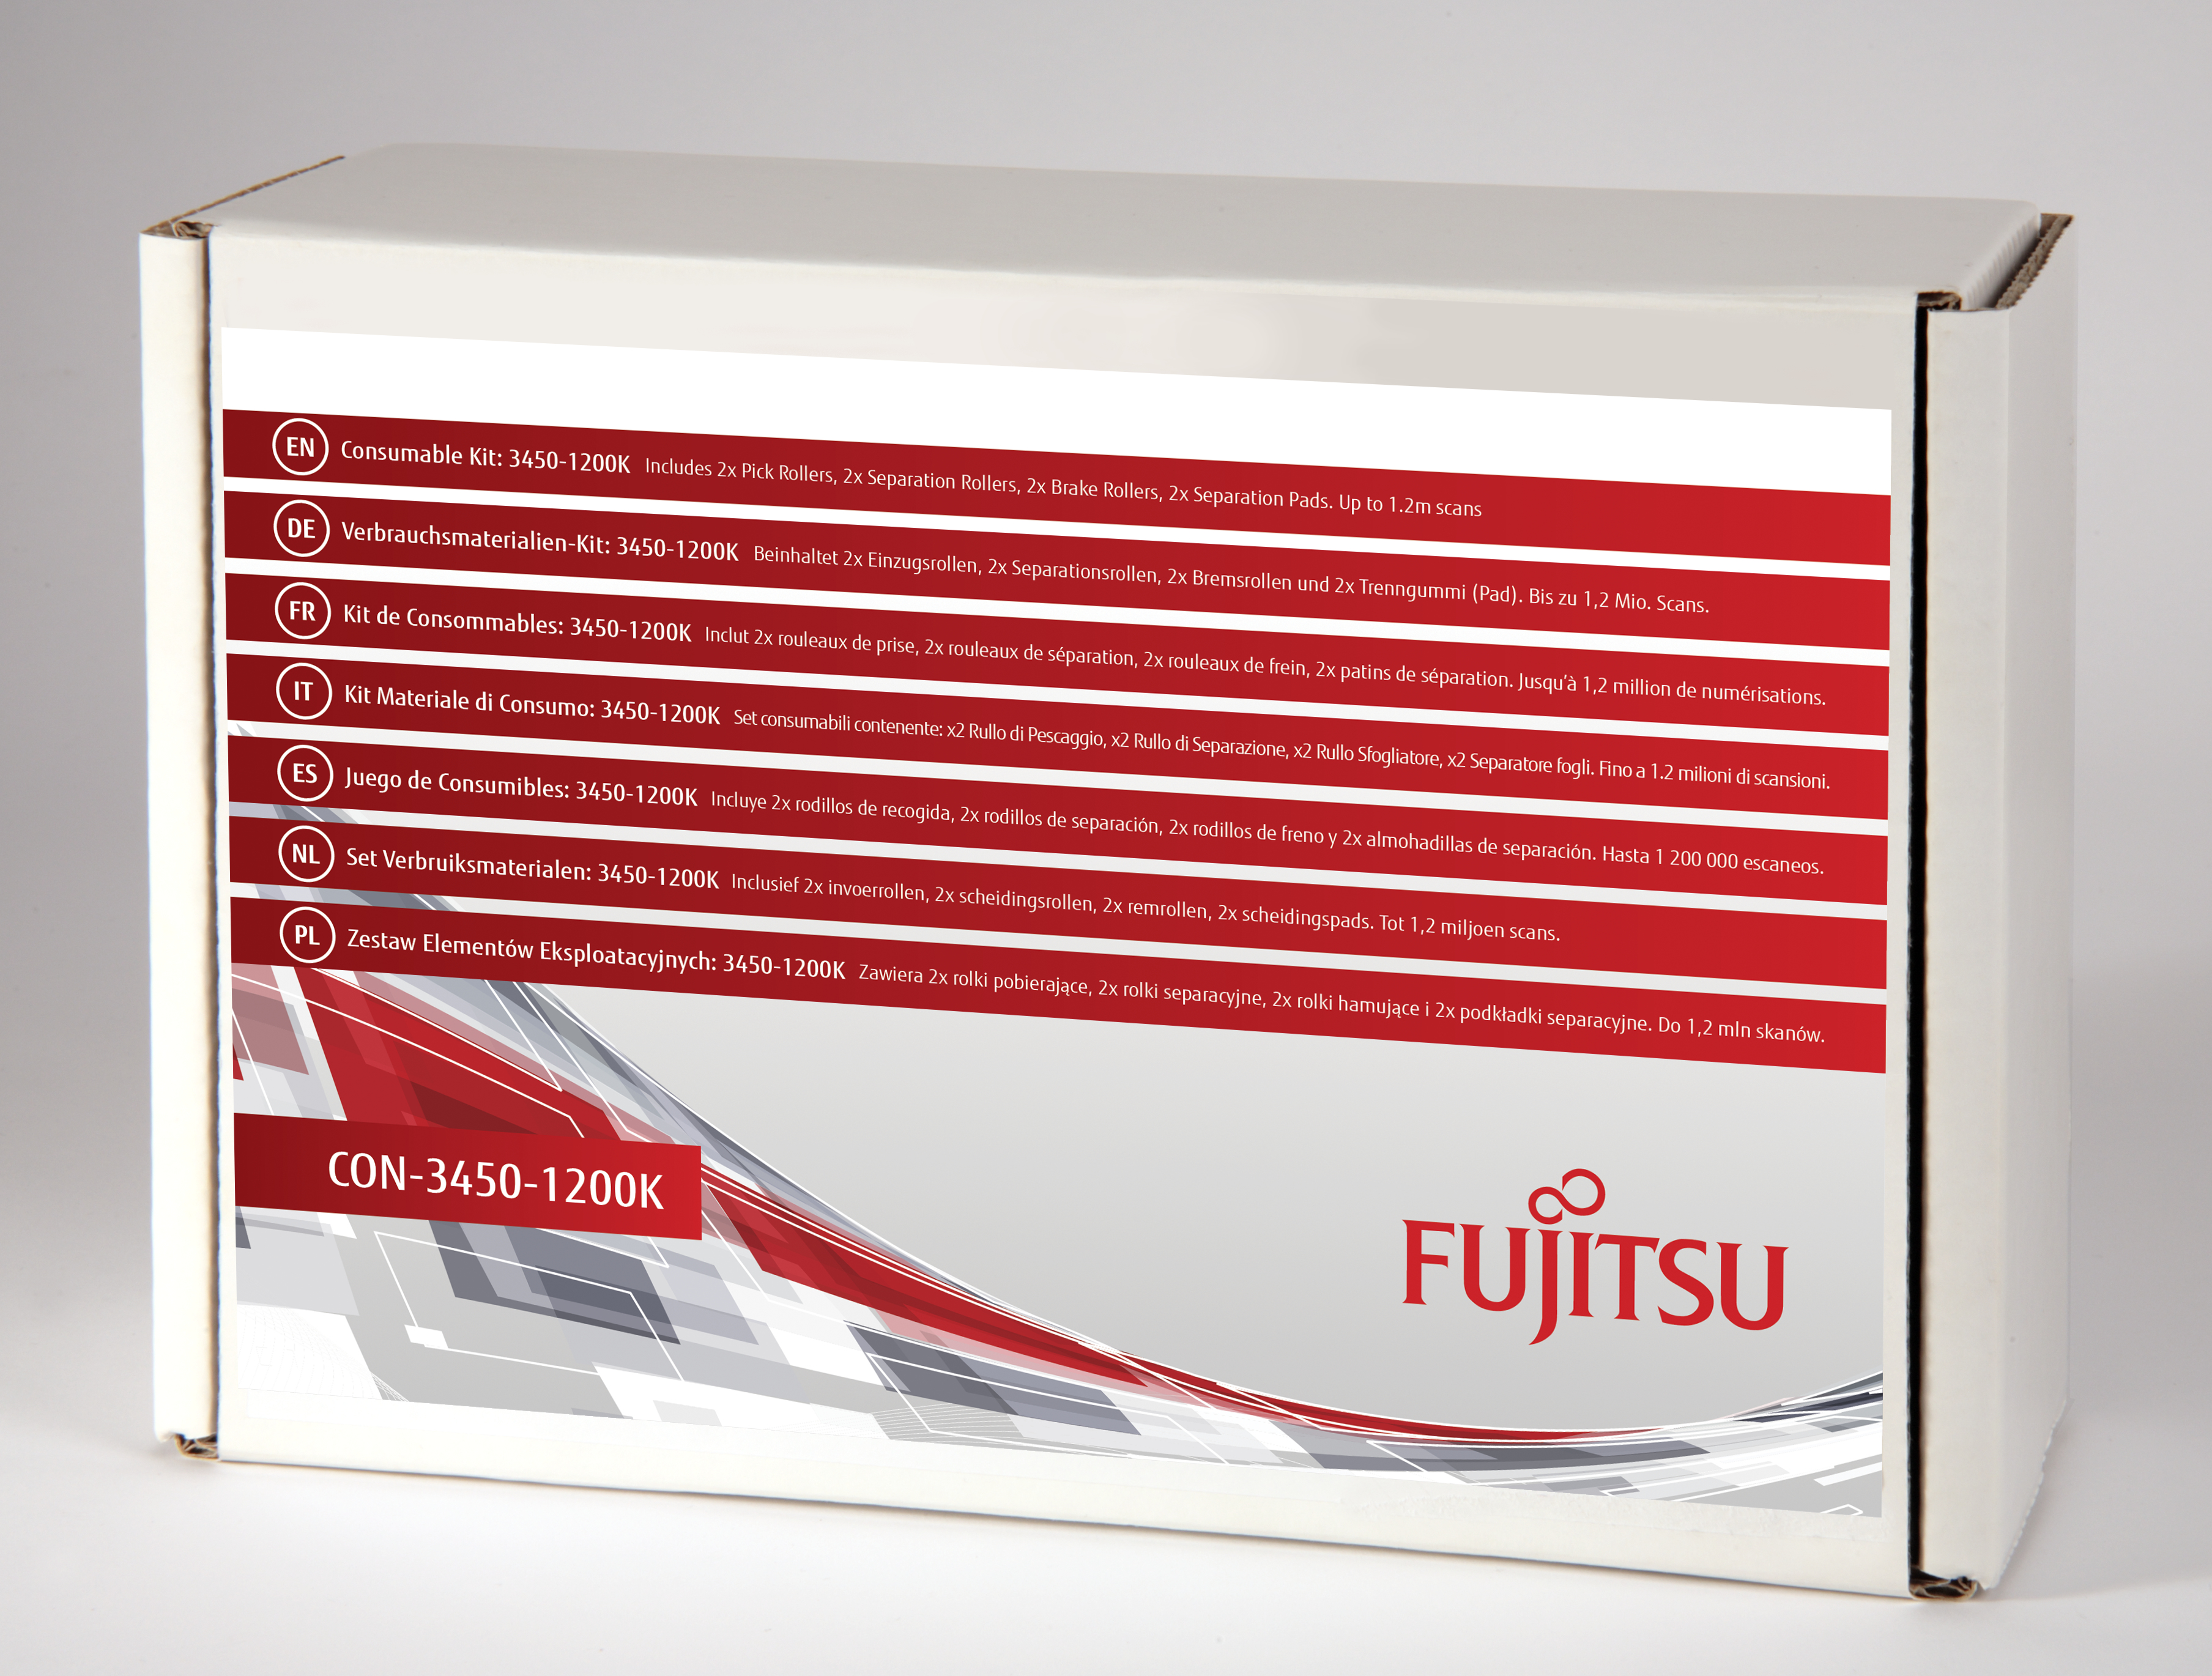 Fujitsu Consumable Kit: 3450-1200K